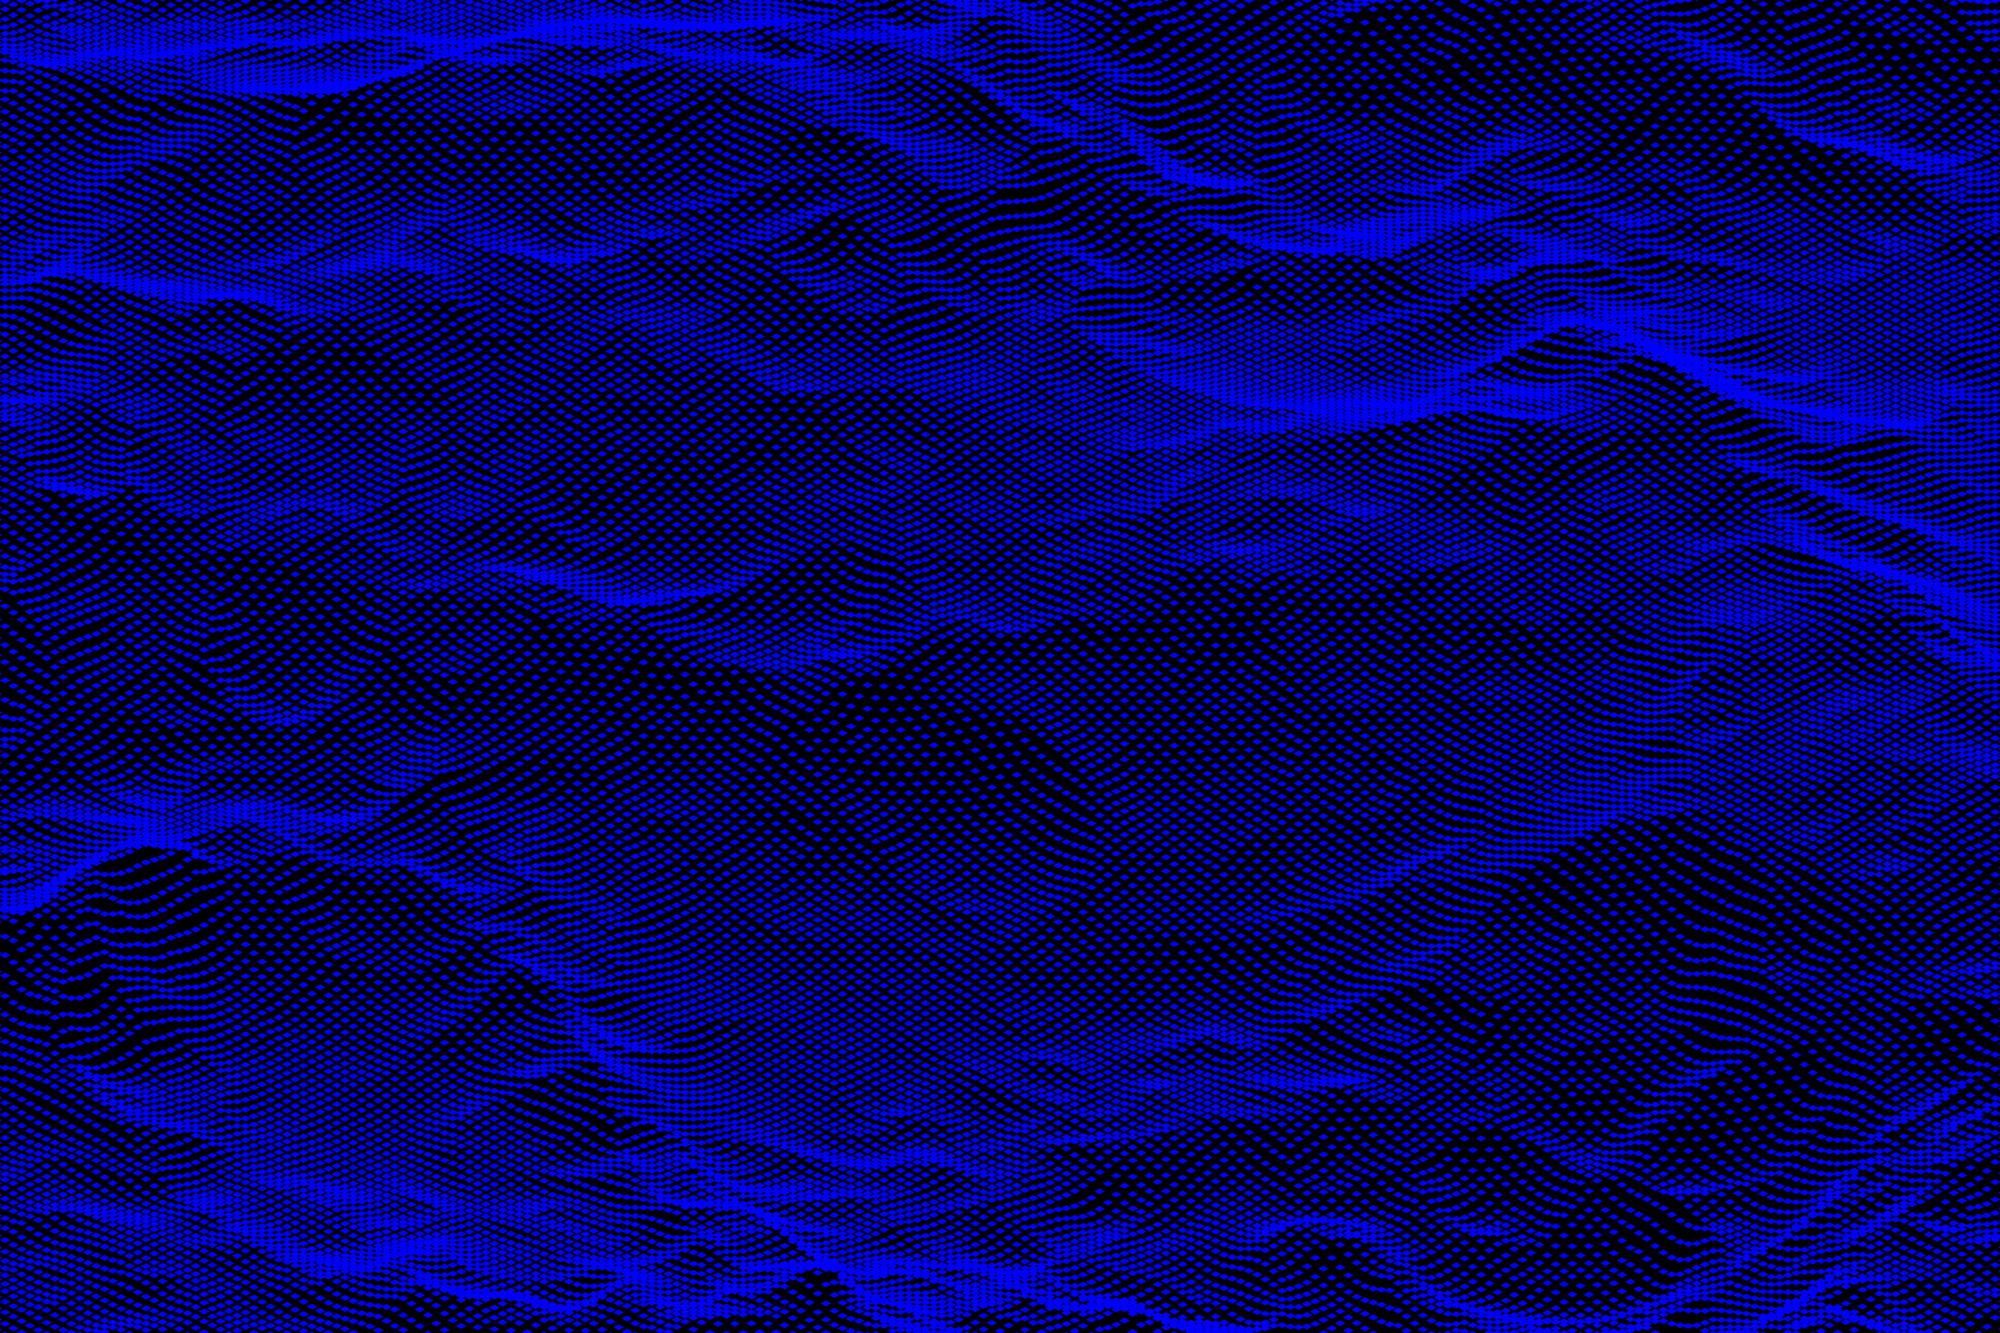 UVA LG blue waves